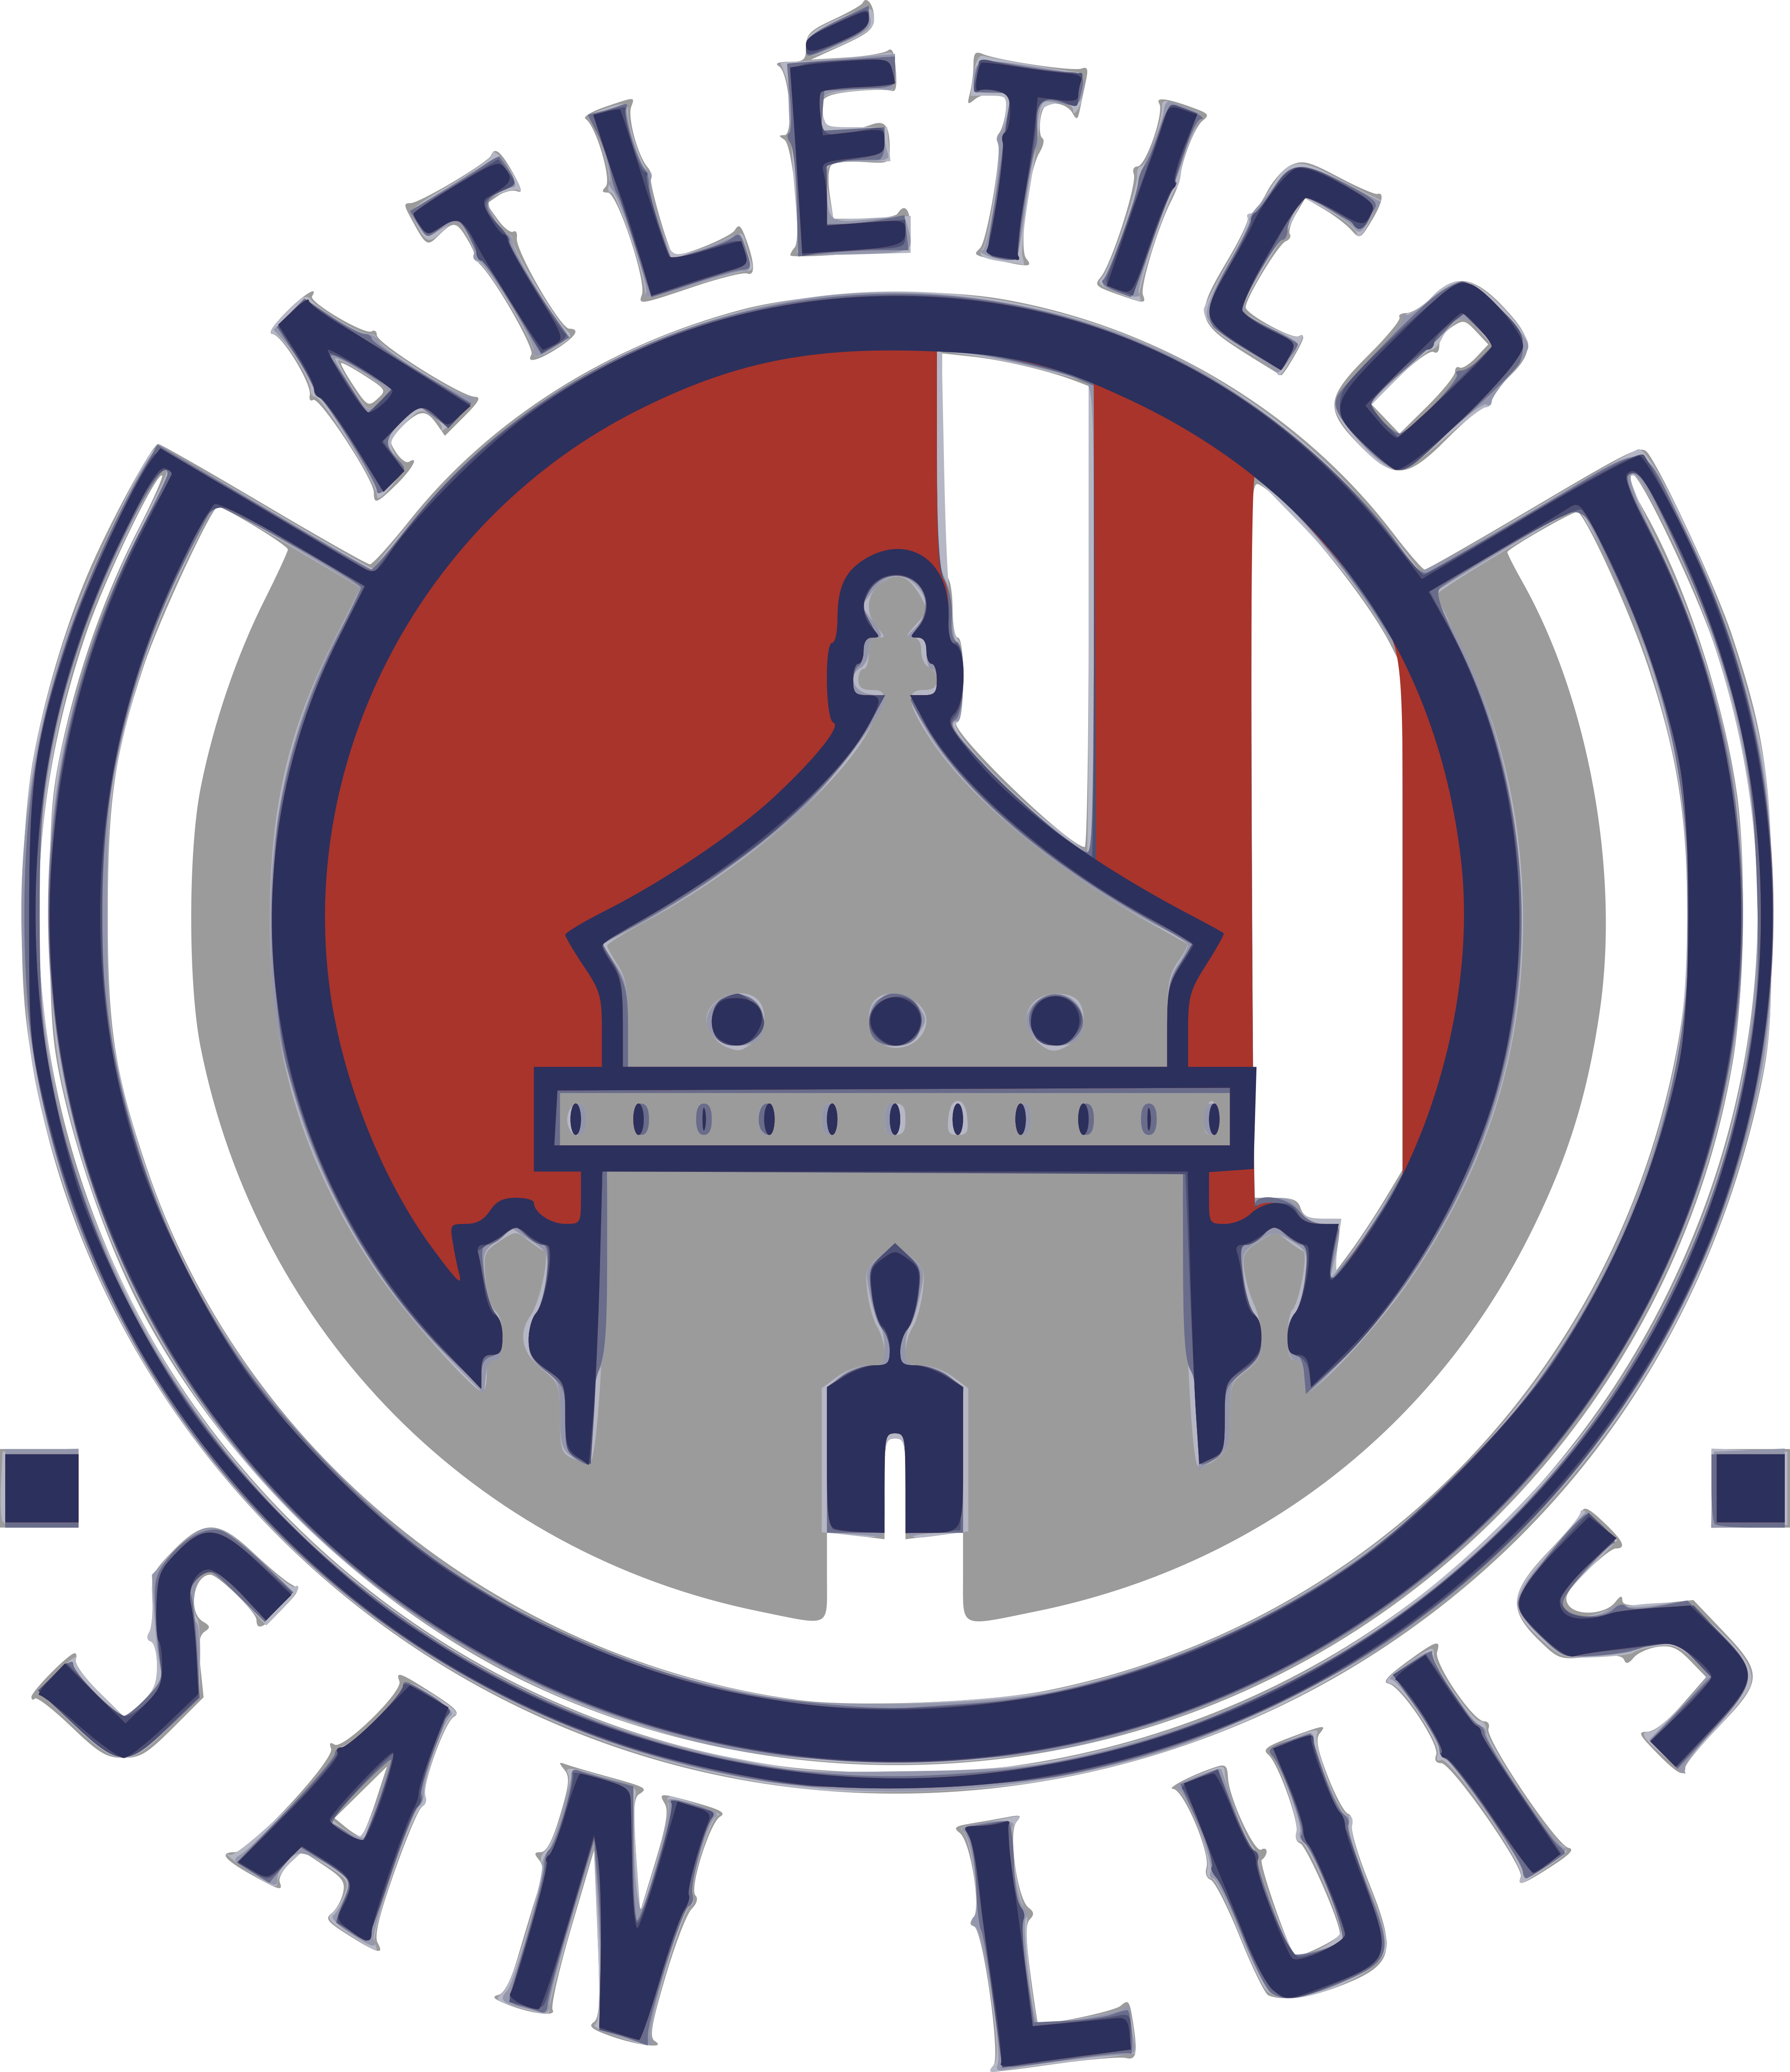 atlético san luis logo 5 - Atlético de San Luis Logo